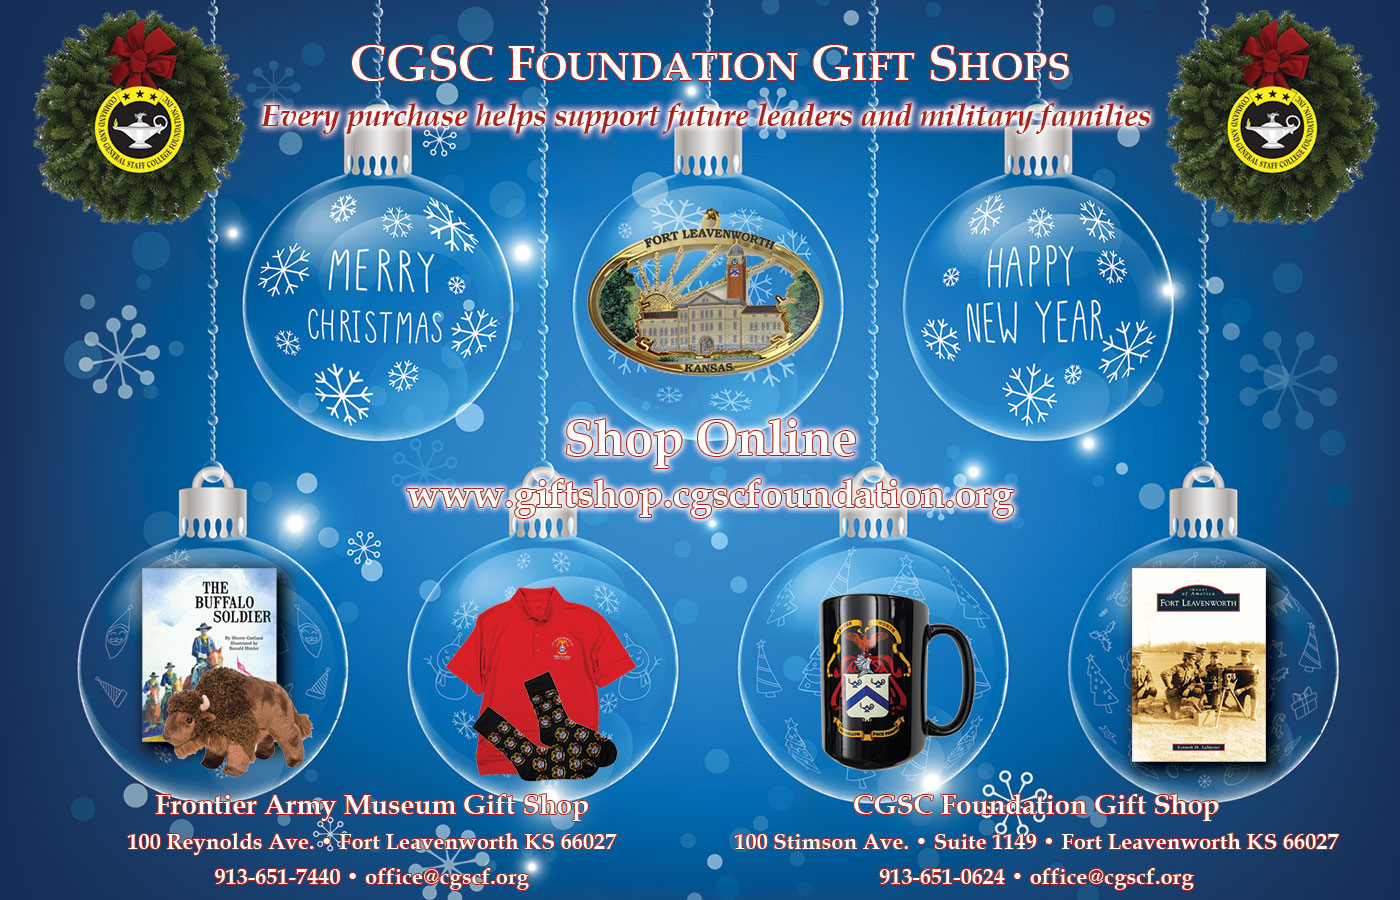 CGSC Foundation gift shop image